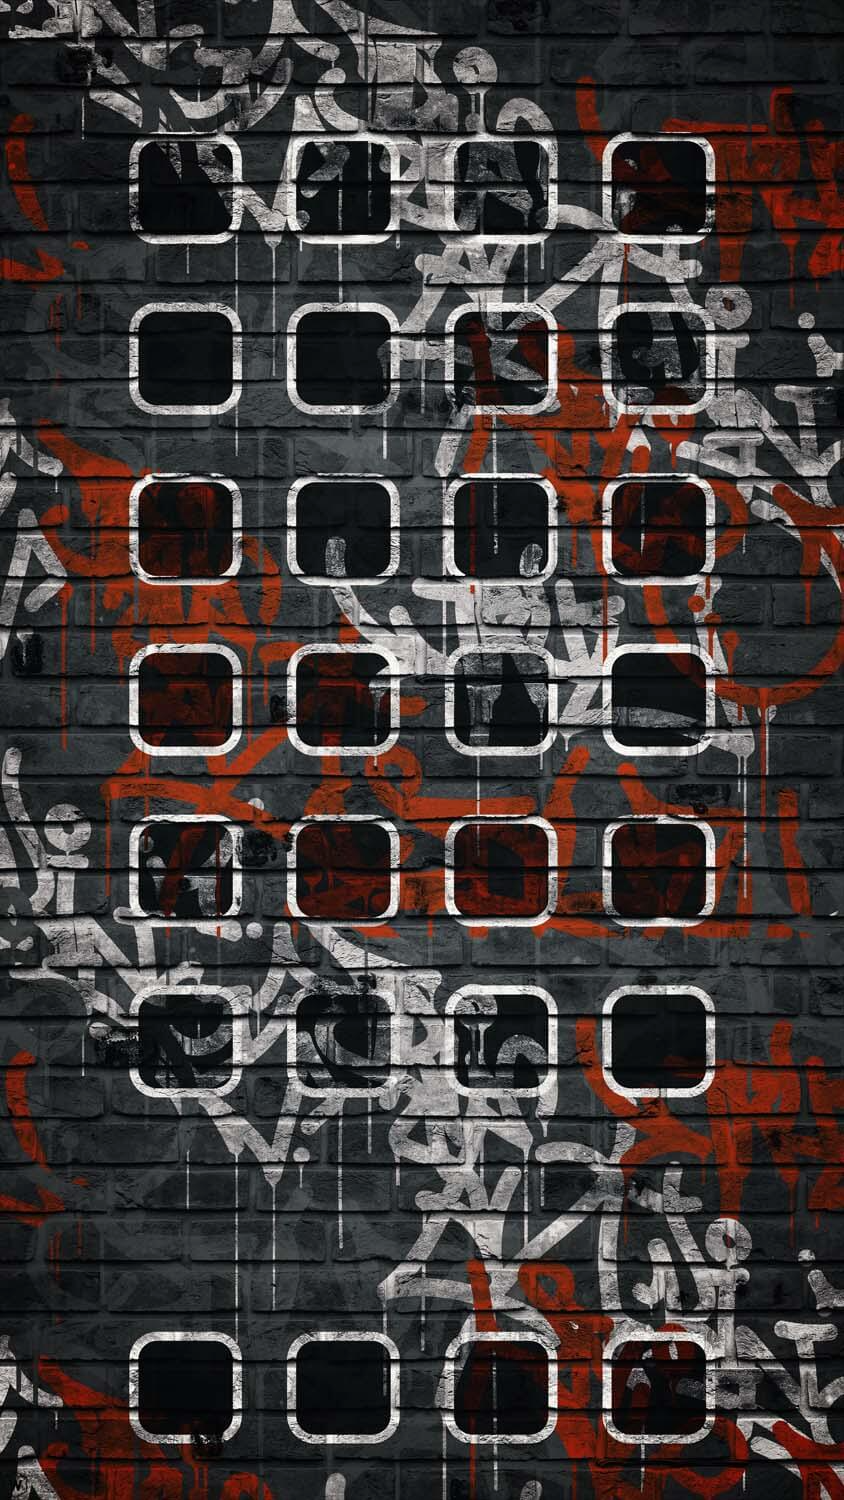 Graffiti IOS App Dock Wallpaper  IPhone Wallpapers